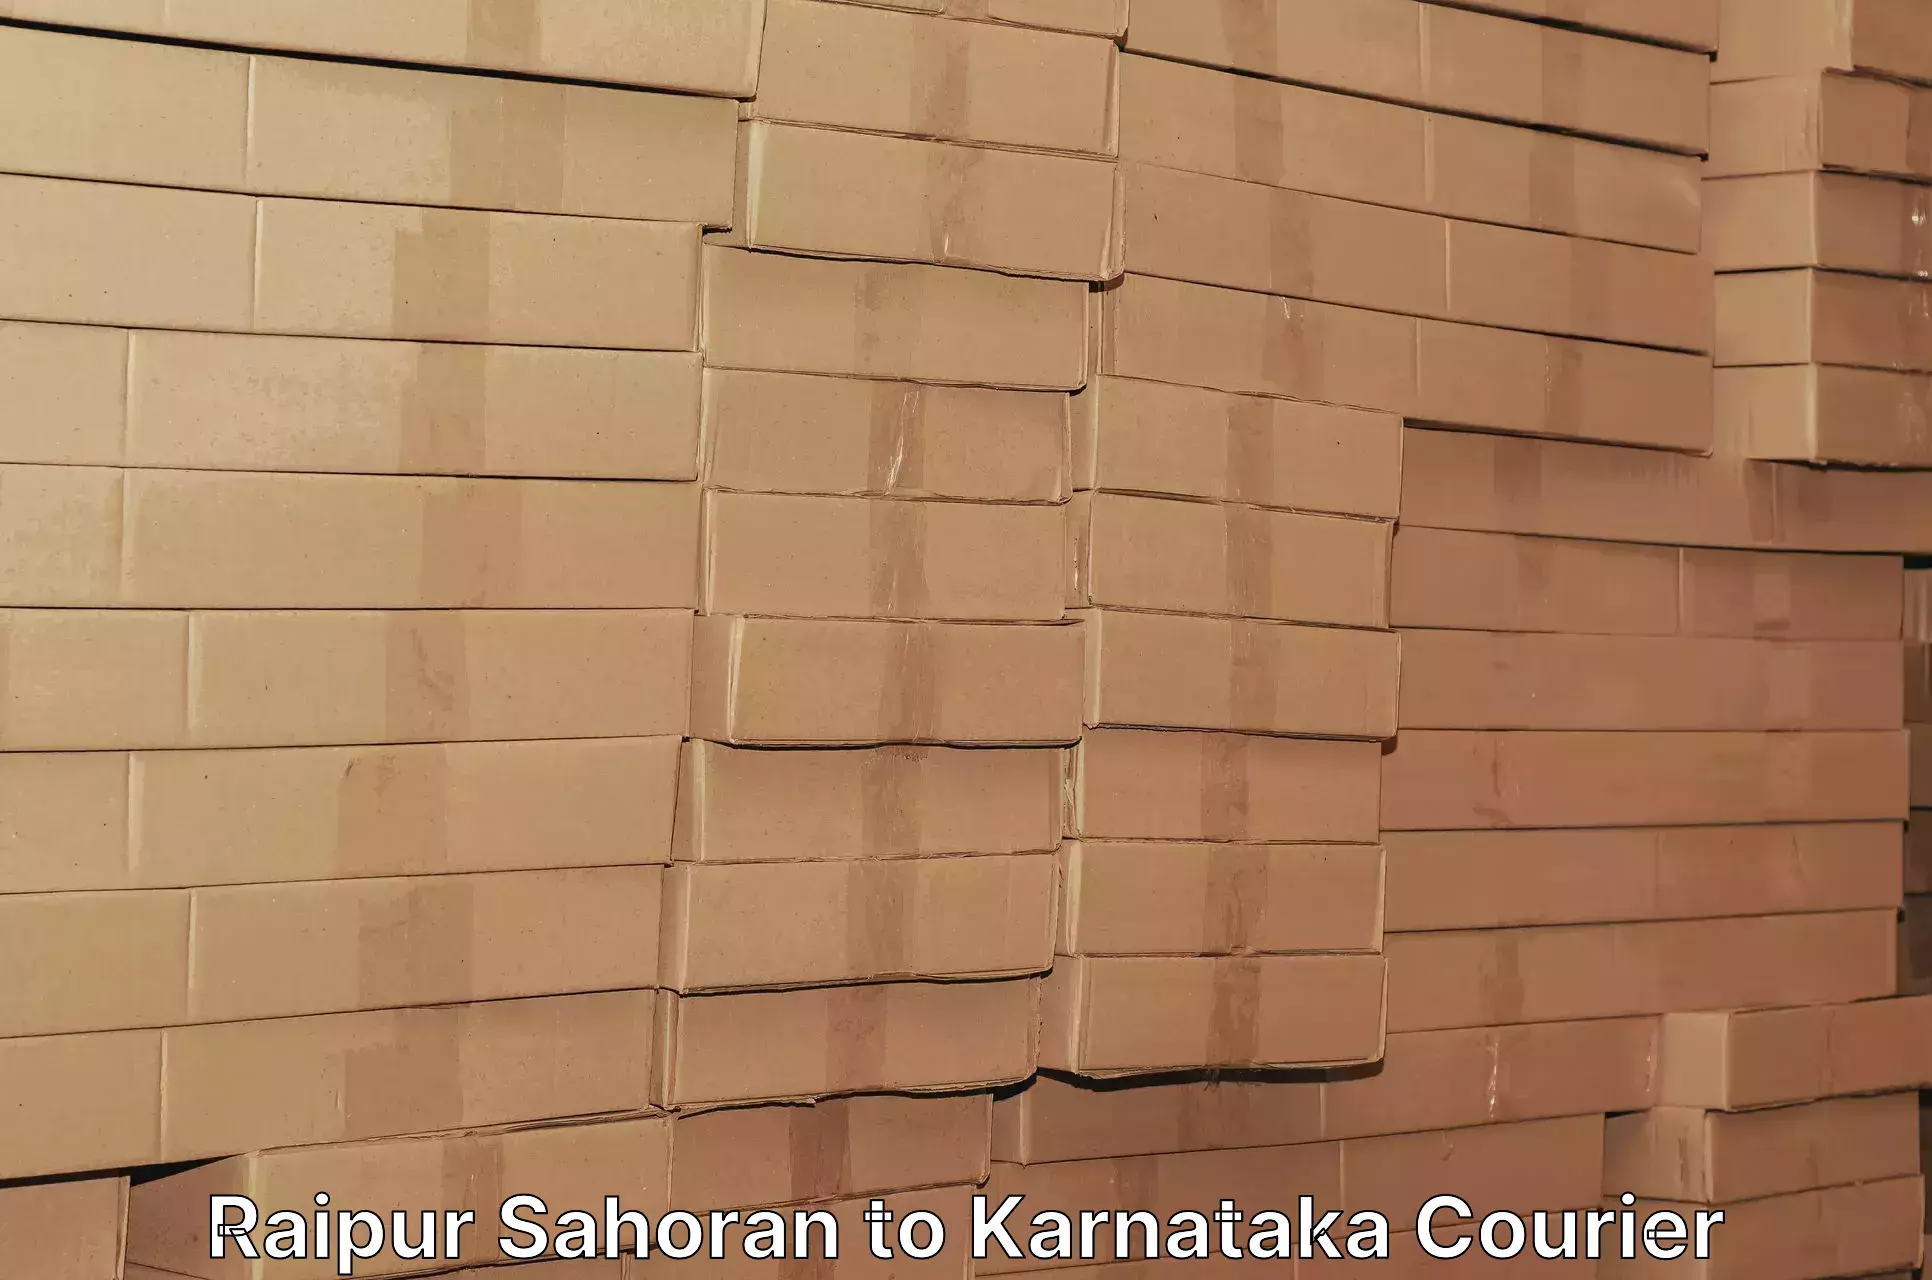 Delivery service partnership Raipur Sahoran to Kanjarakatte